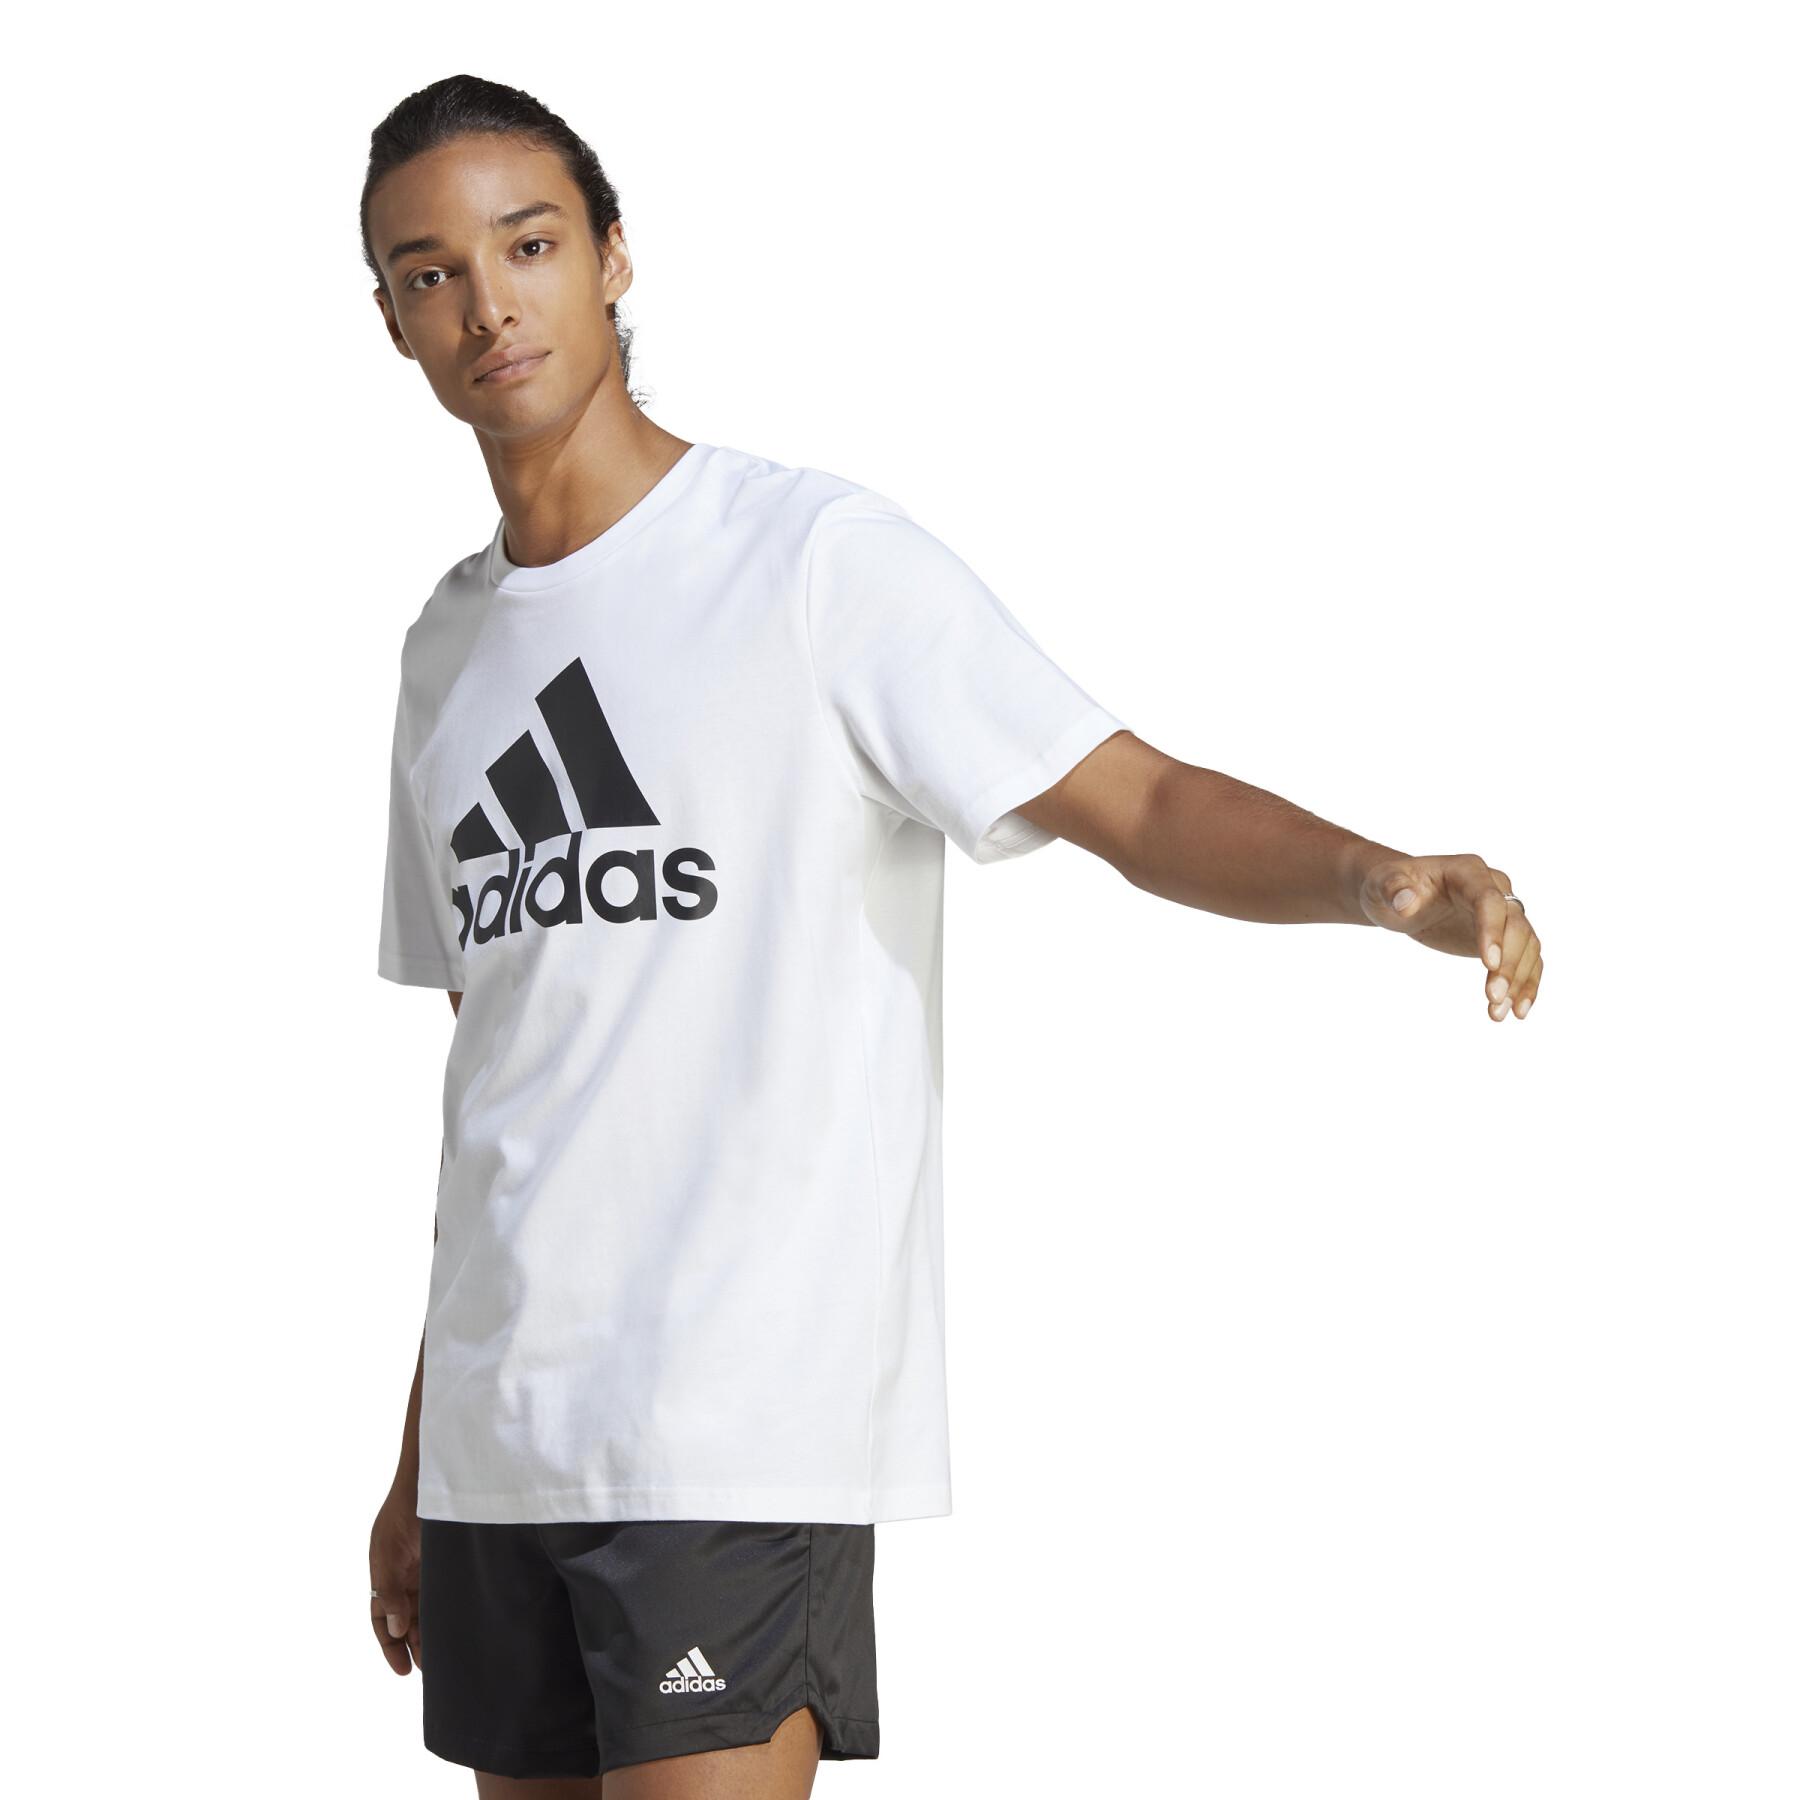 Maglia con logo Adidas Essentials